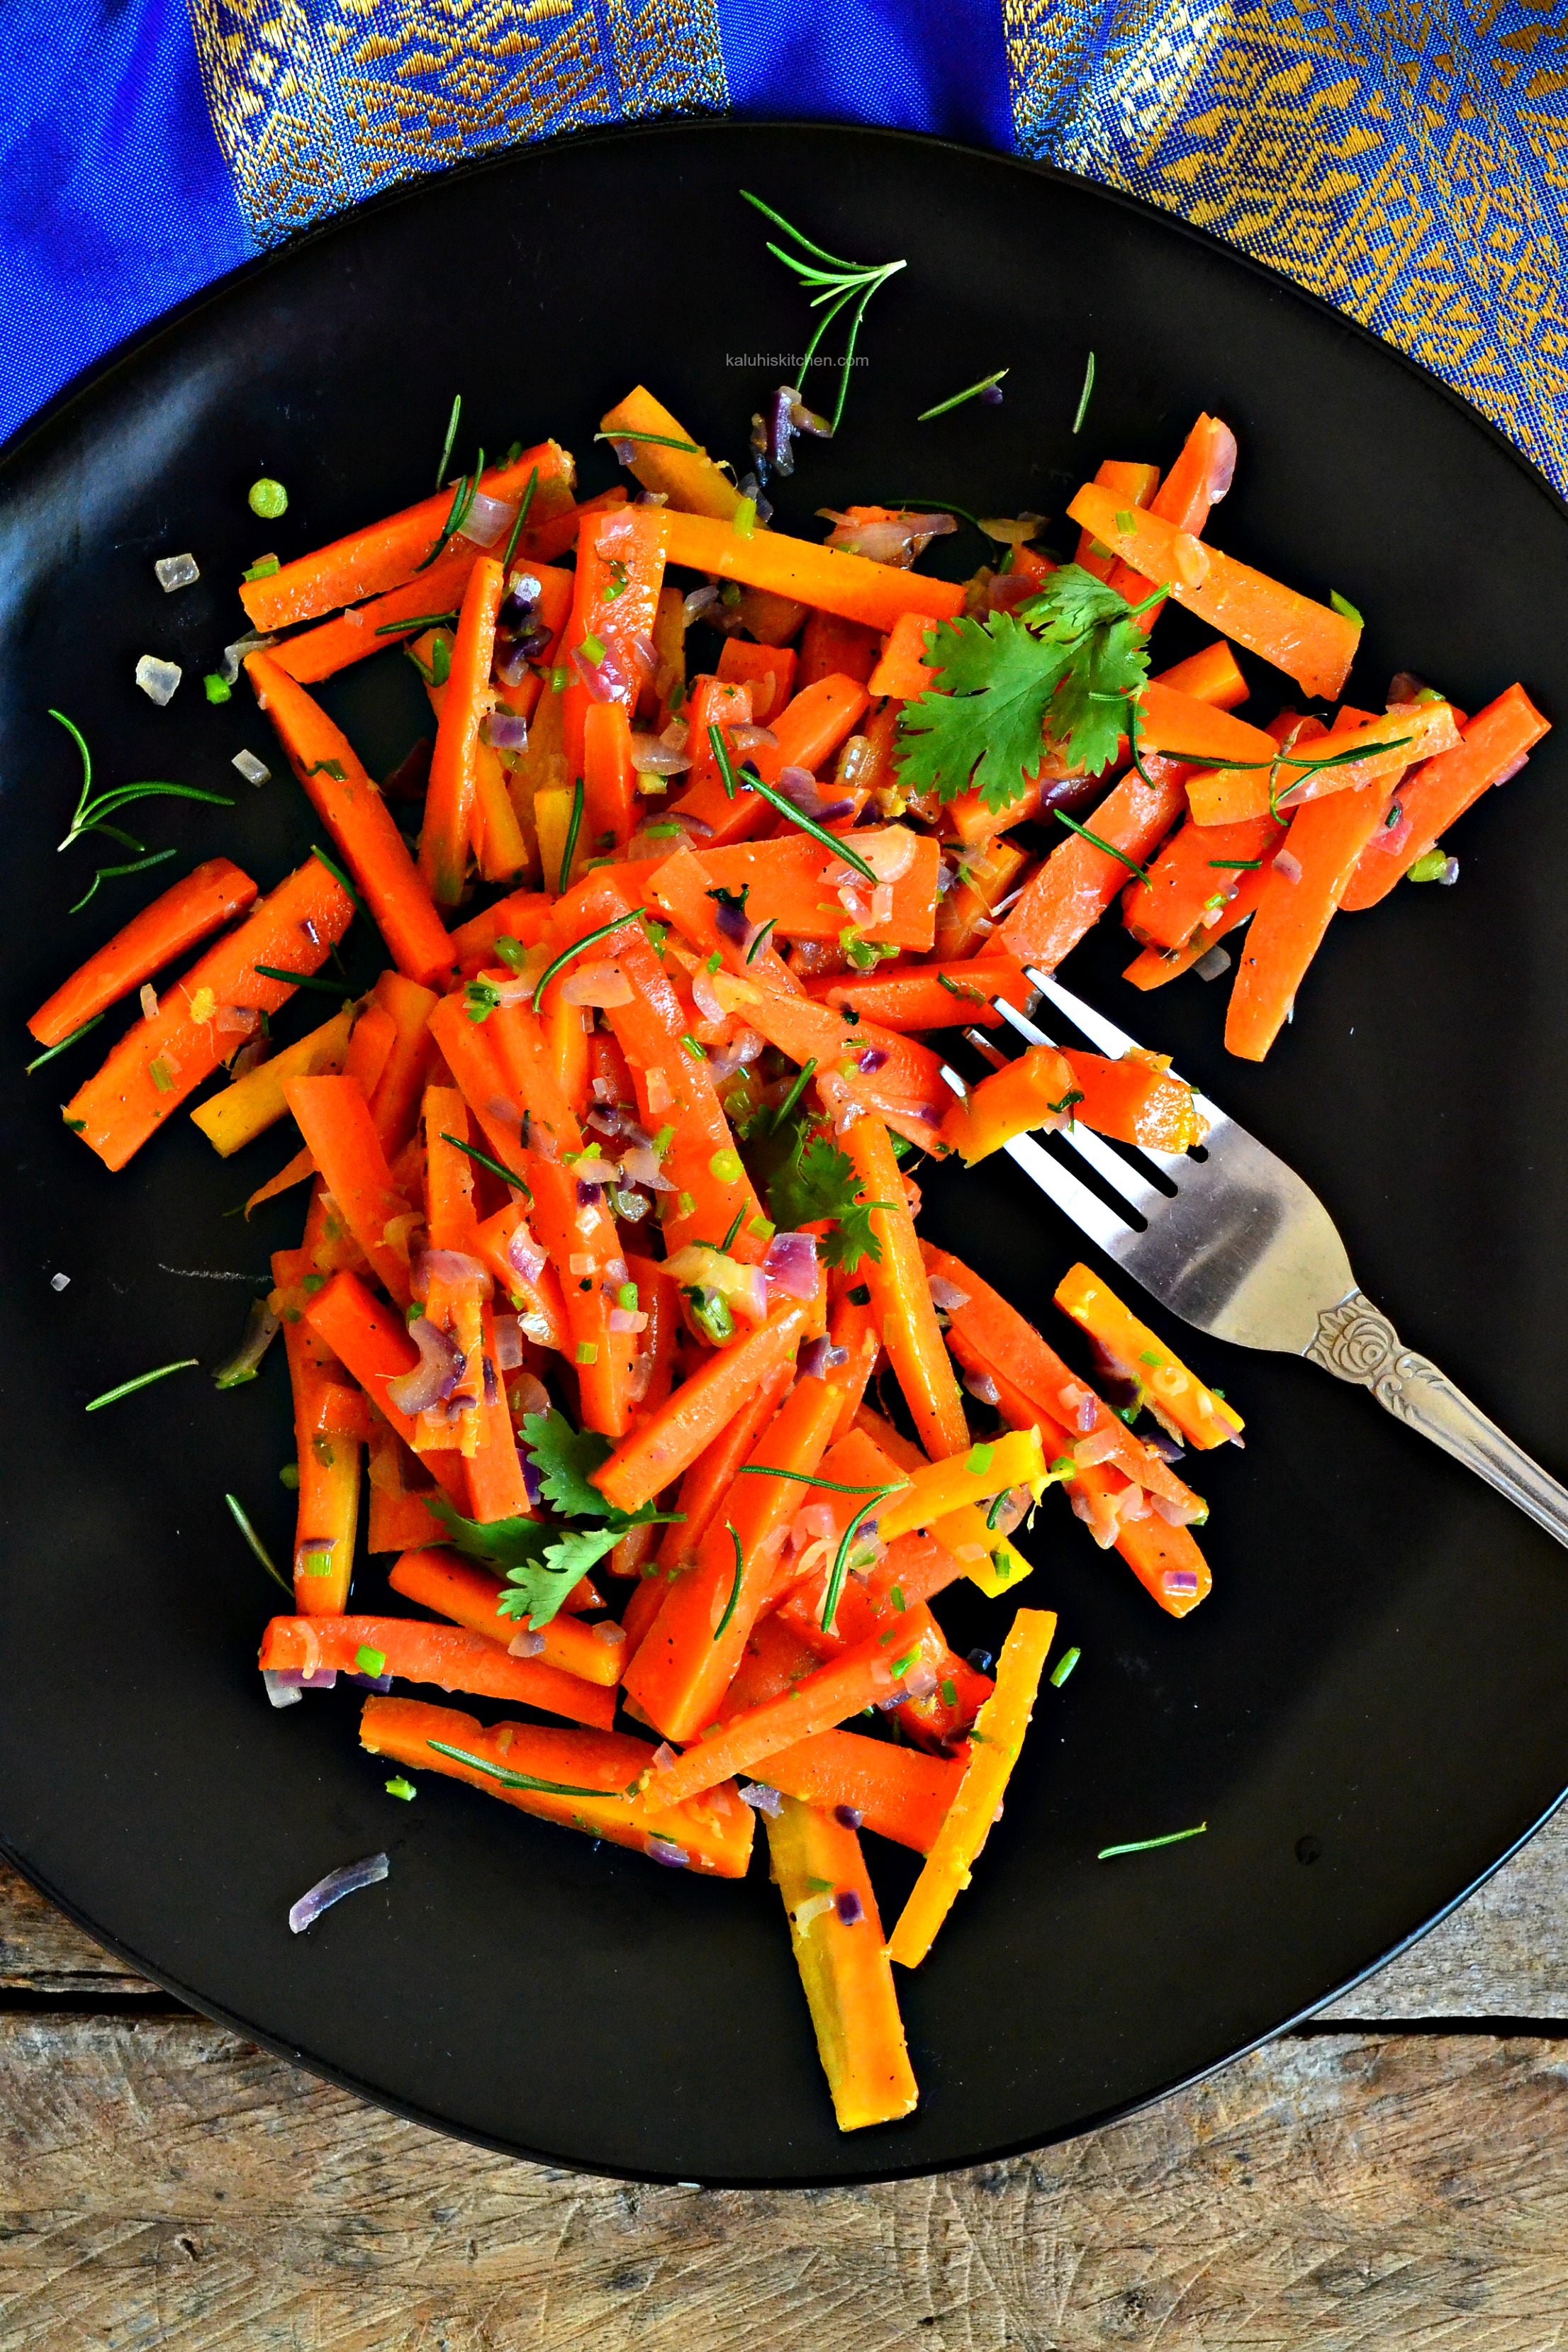 ginger-rosemary-carrot-fingers_how-to-make-carrots-delicious_carrot-recipes_vegan_kaluhiskitchen-com